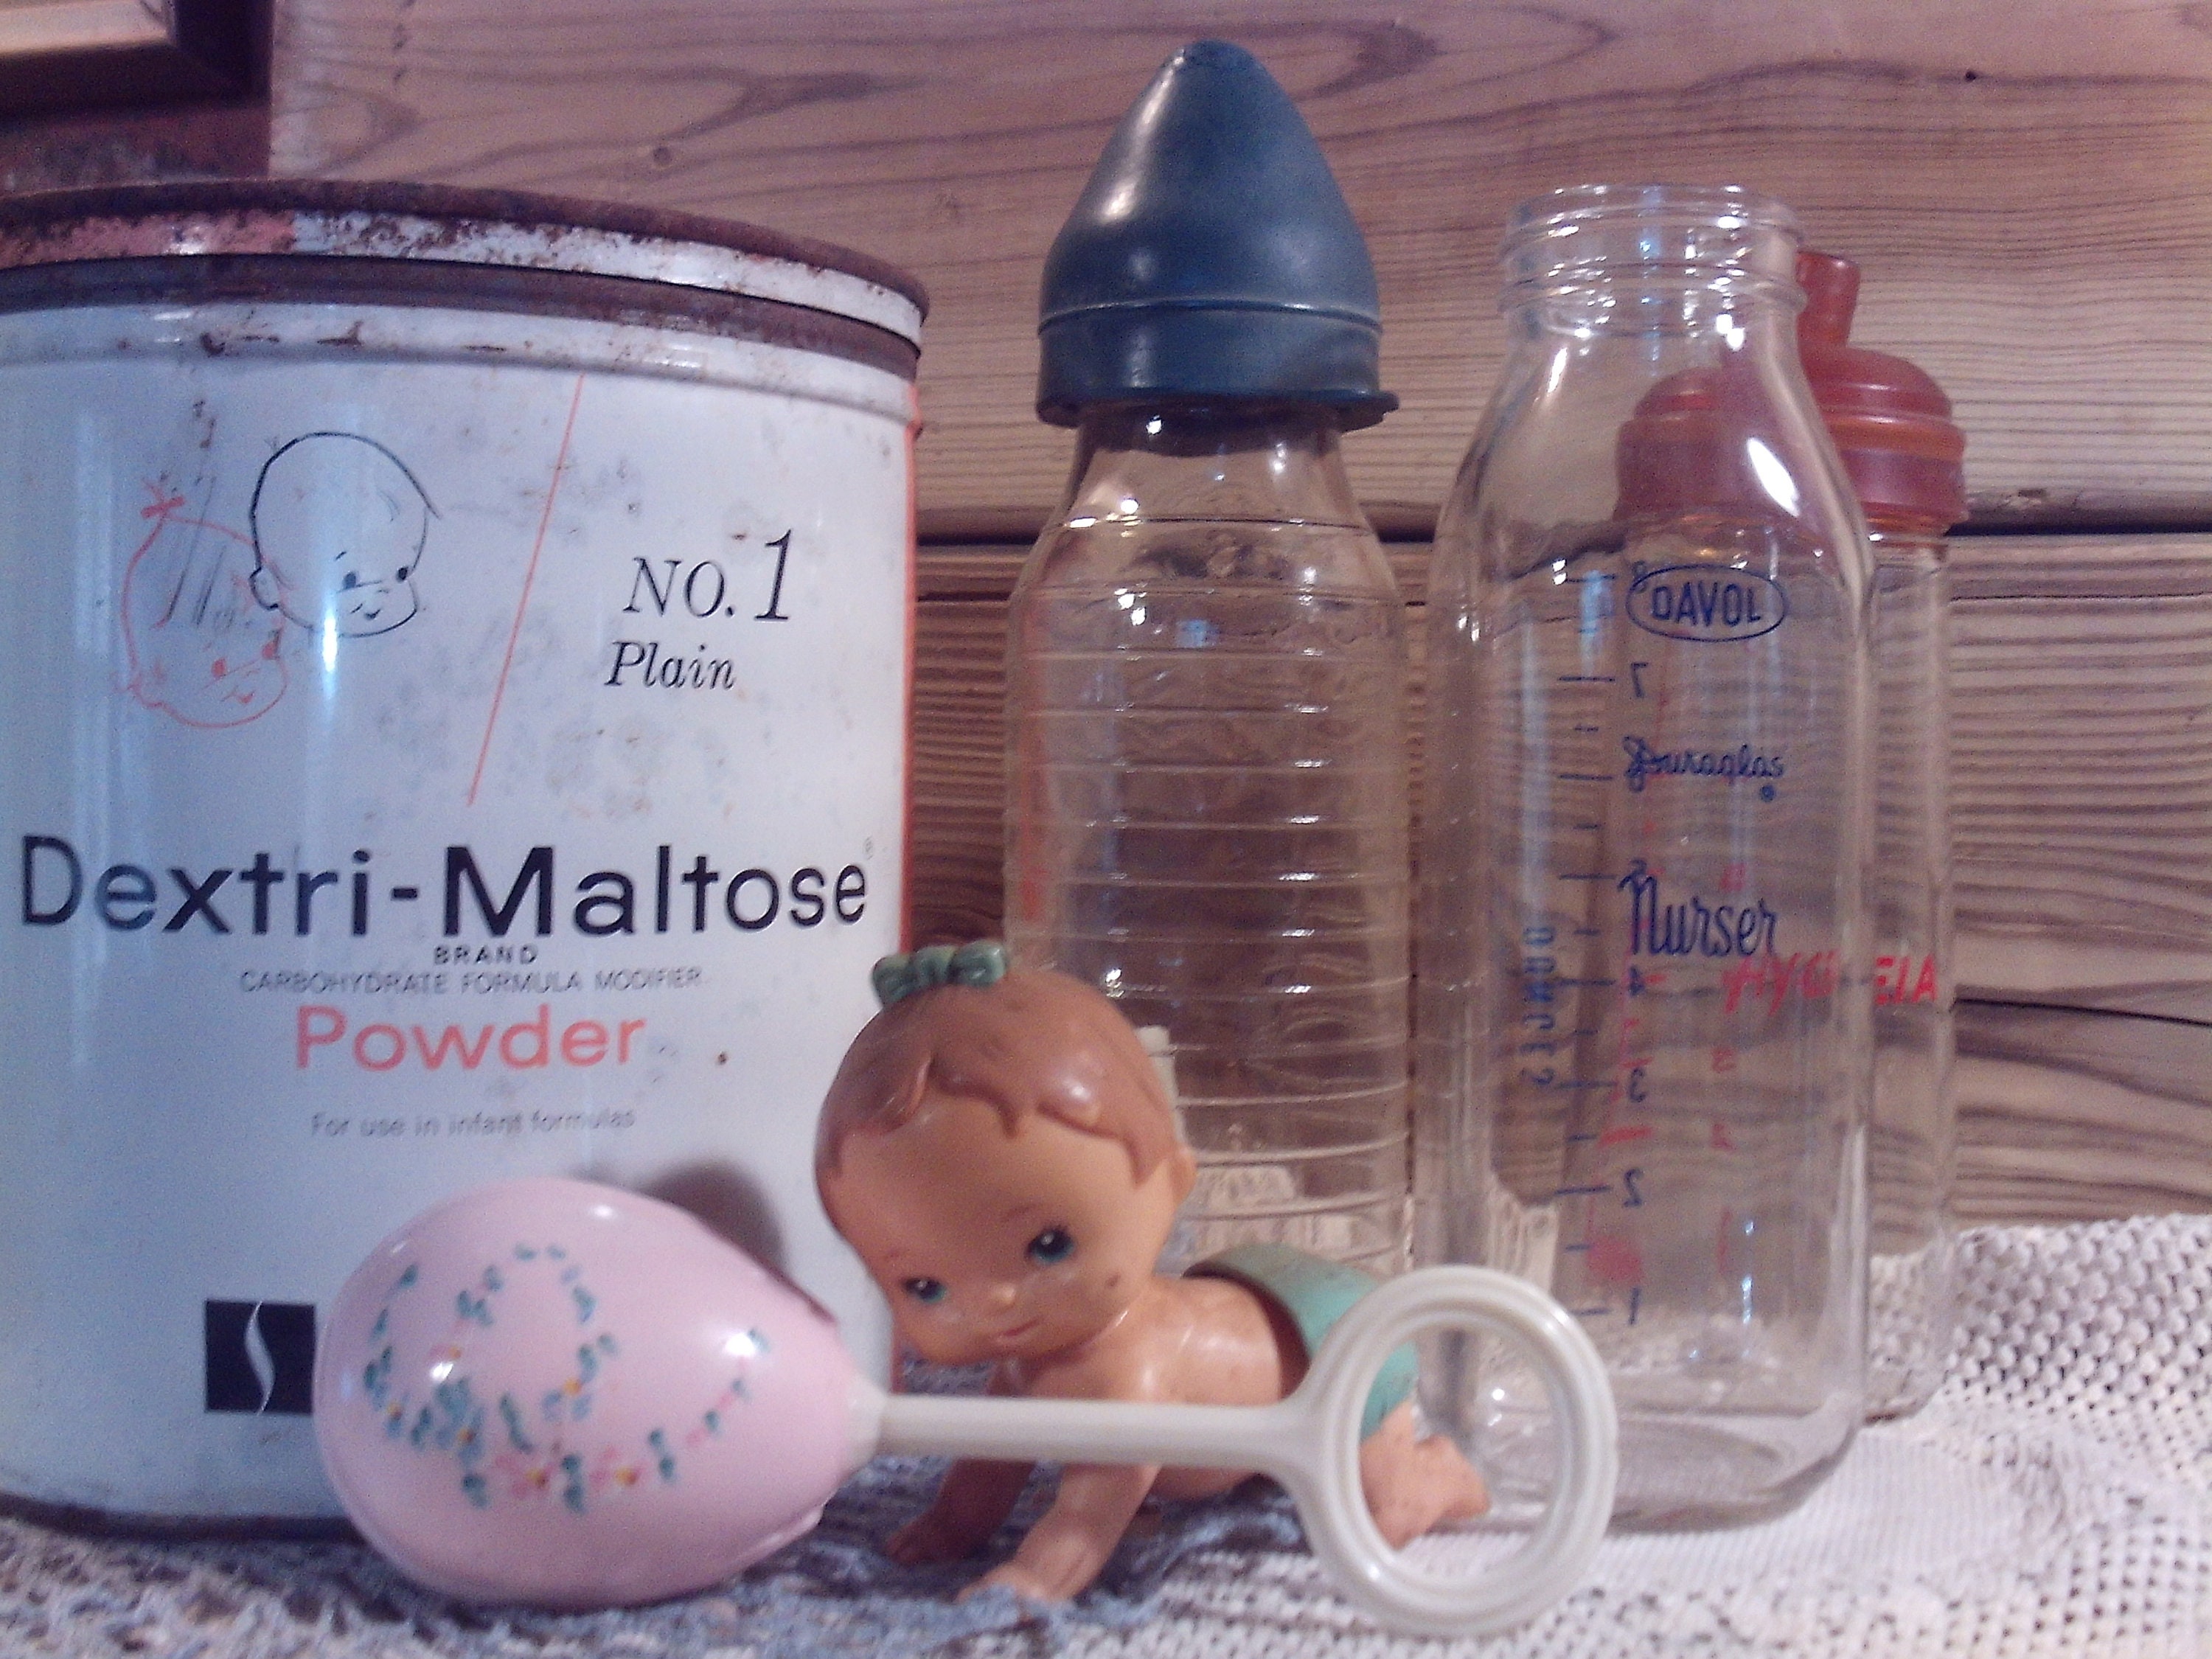 Vintage Baby Bottle With Dexti-matlose Powder, Vintage Baby Items, Glass  Baby Bottles, Baby Room Decoration, Vintage Nursers, Vintage Rattle -   New Zealand